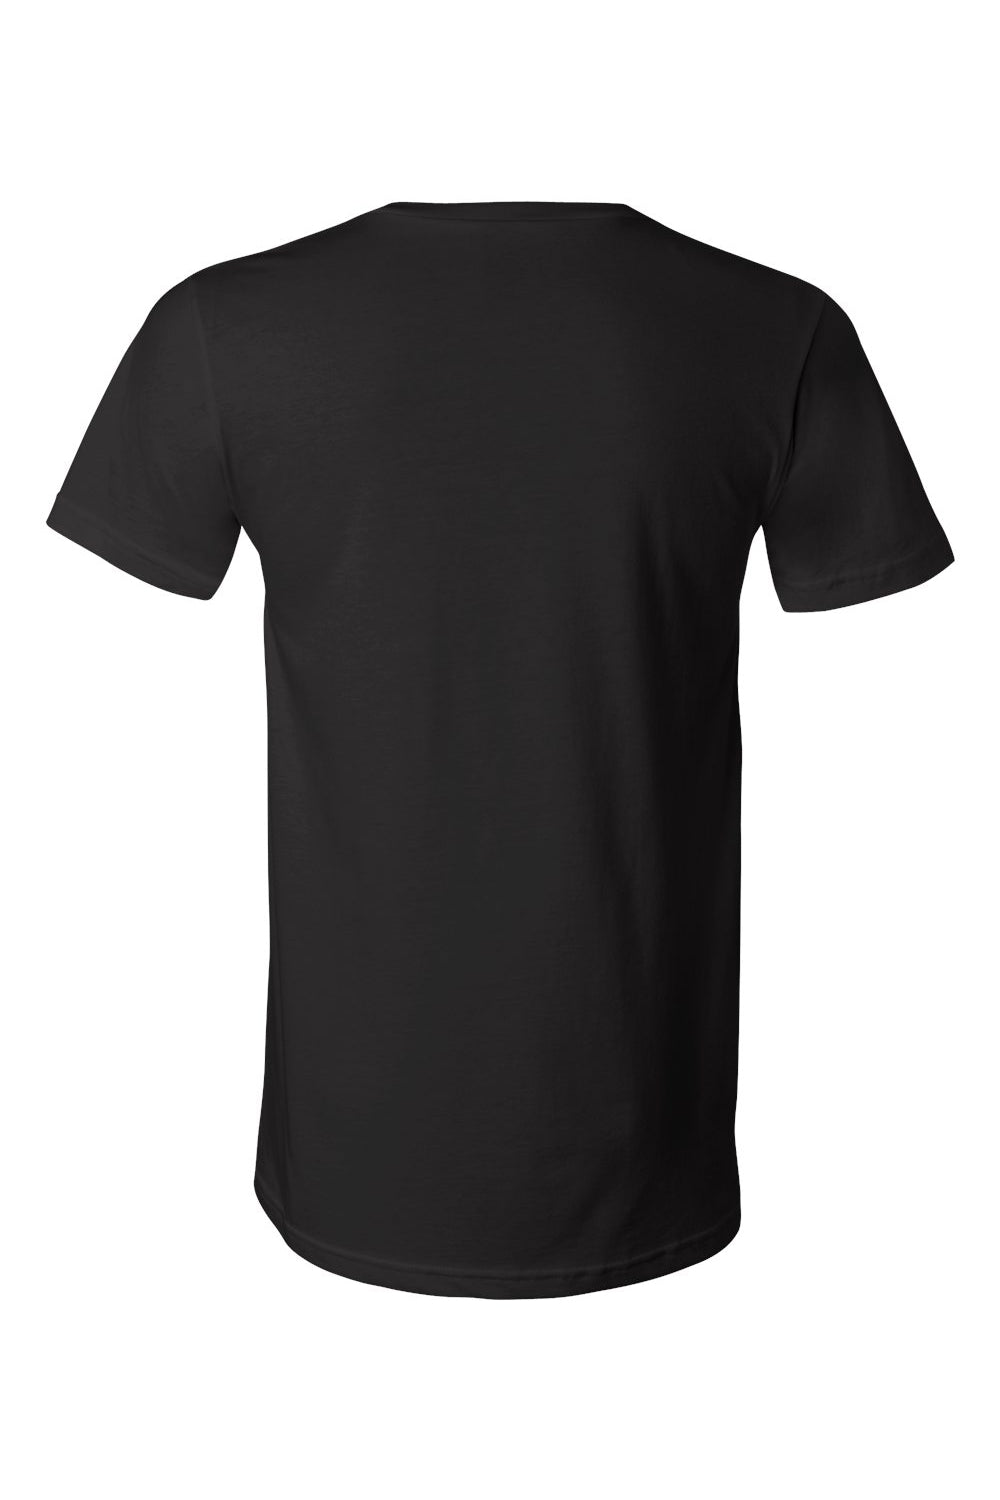 Bella + Canvas BC3005/3005/3655C Mens Jersey Short Sleeve V-Neck T-Shirt Black Flat Back